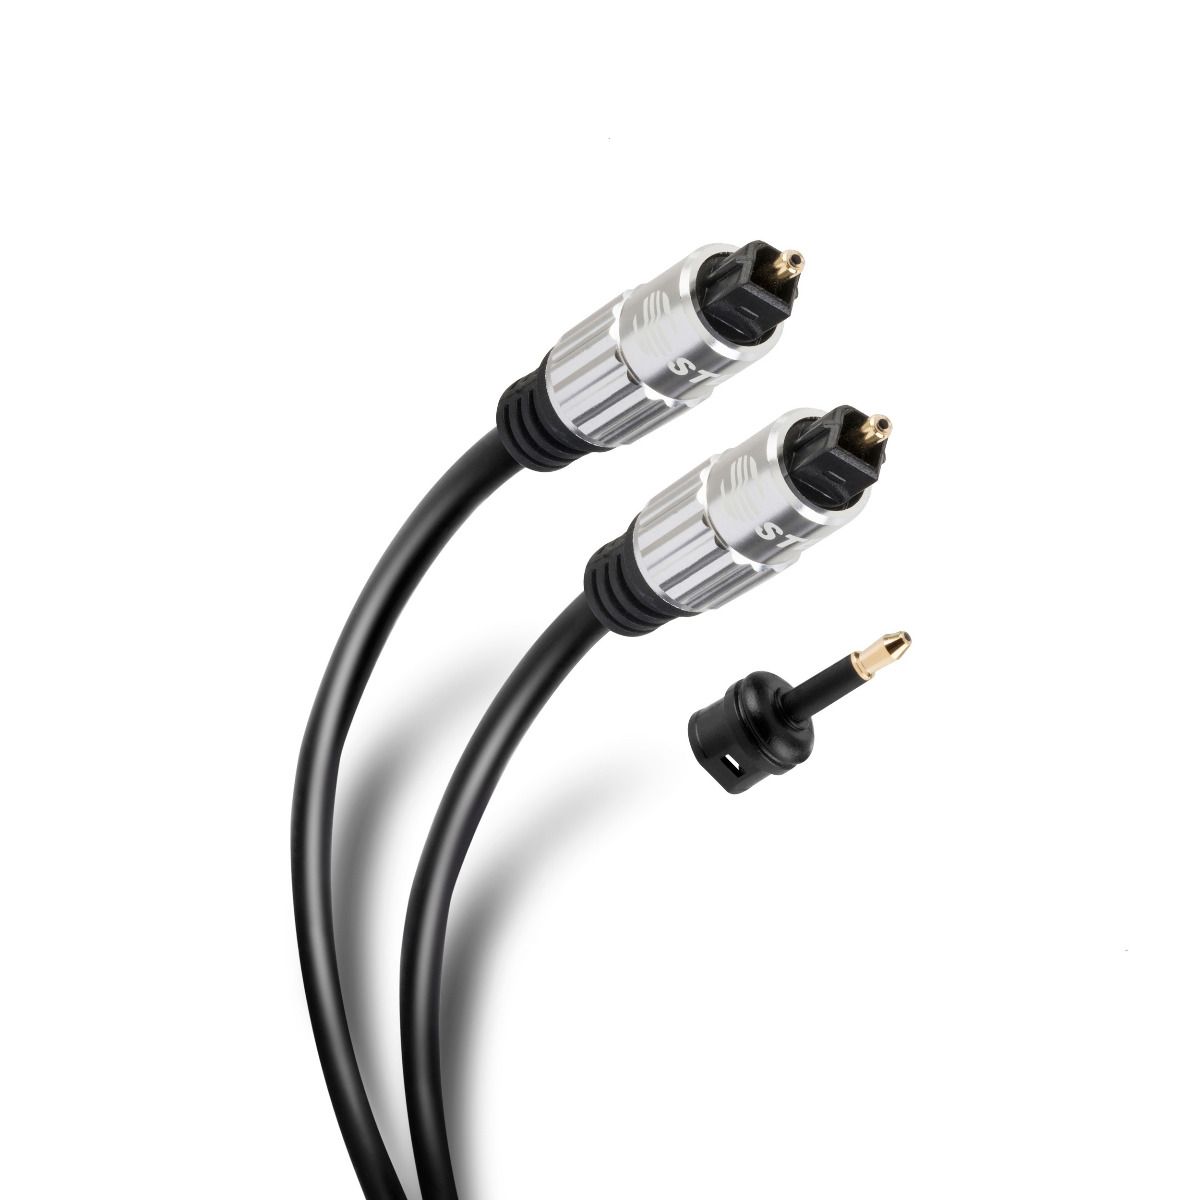 cable de fibra óptica router – Compra cable de fibra óptica router